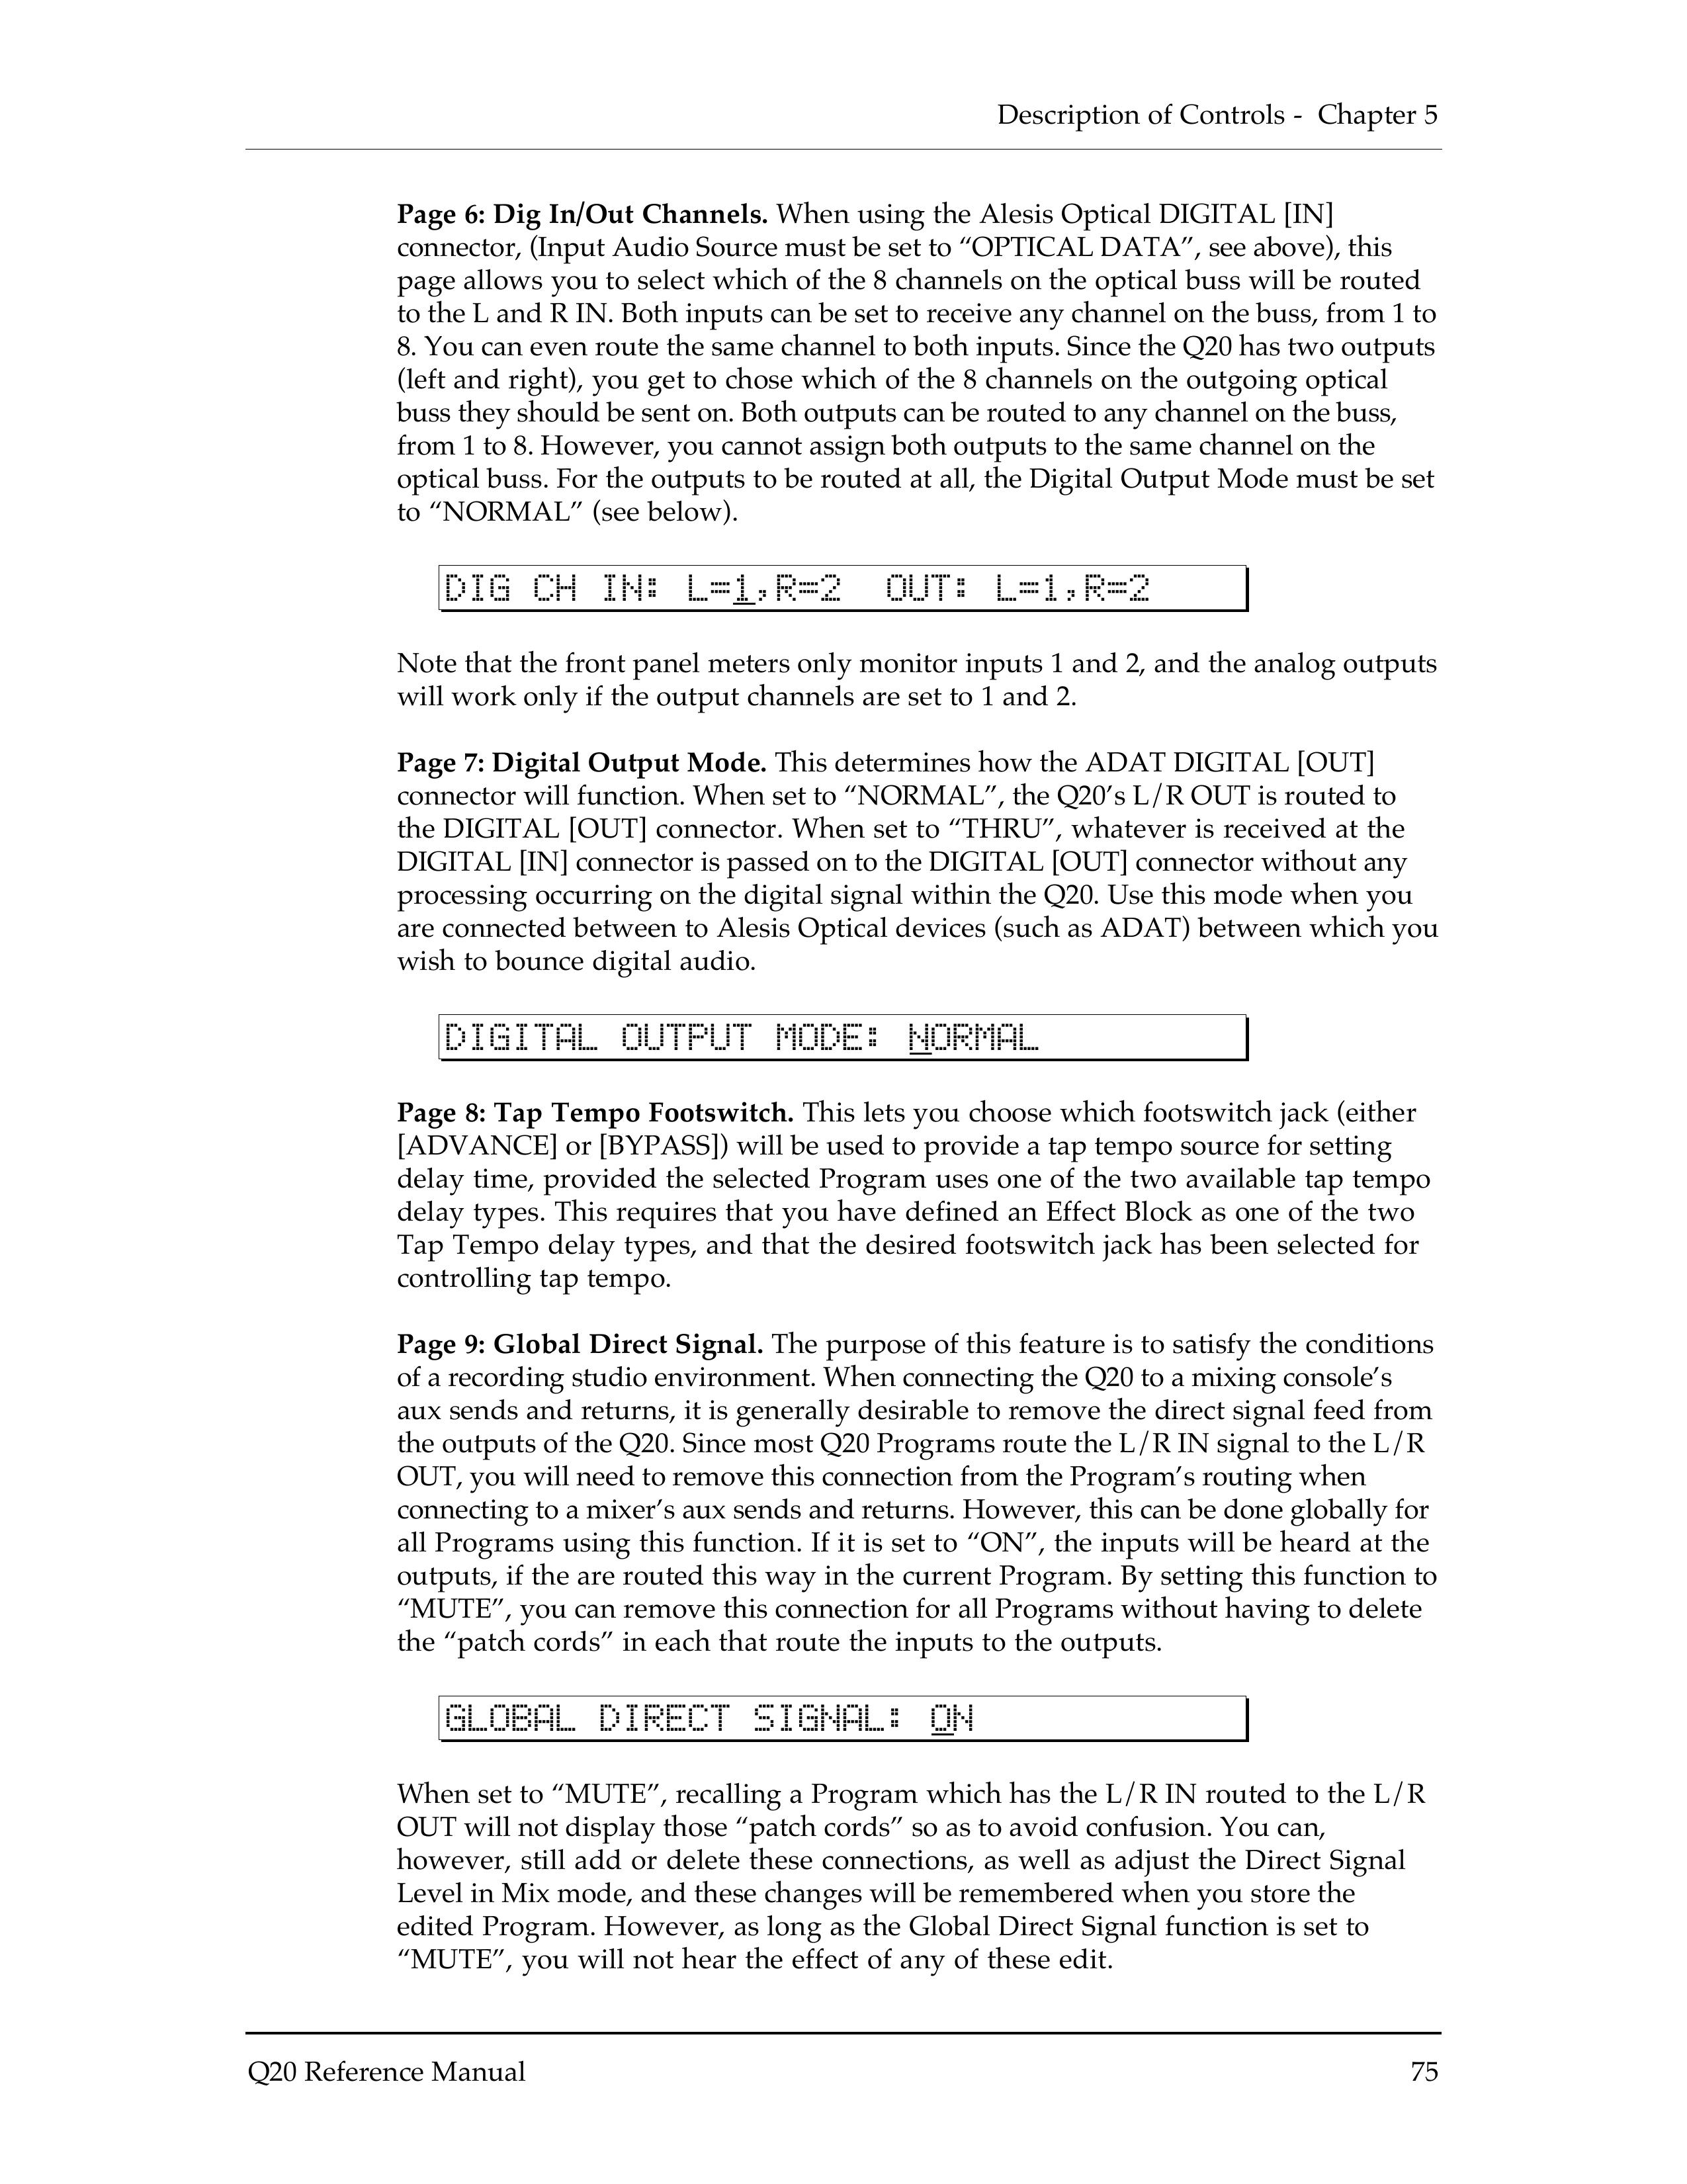 Alesis Q20 DJ Equipment User Manual (Page 77)